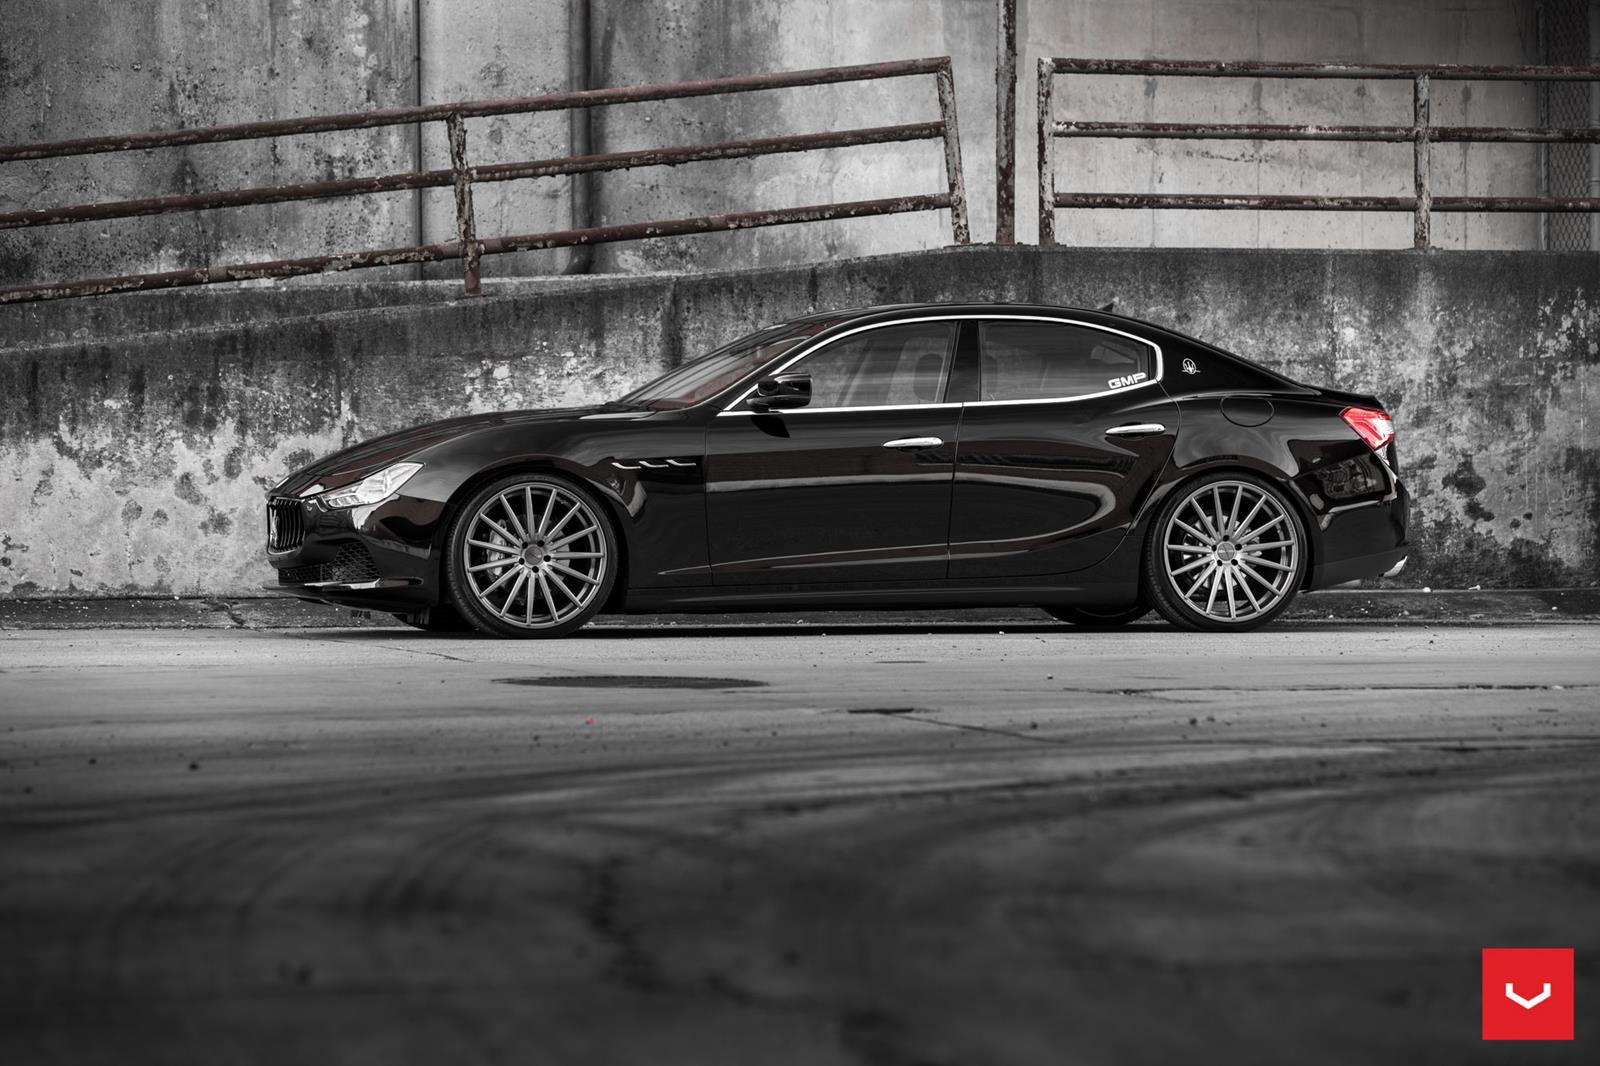 Black Maserati Ghibli Looking Fly On Custom Polished Silver Wheels | Carscoops